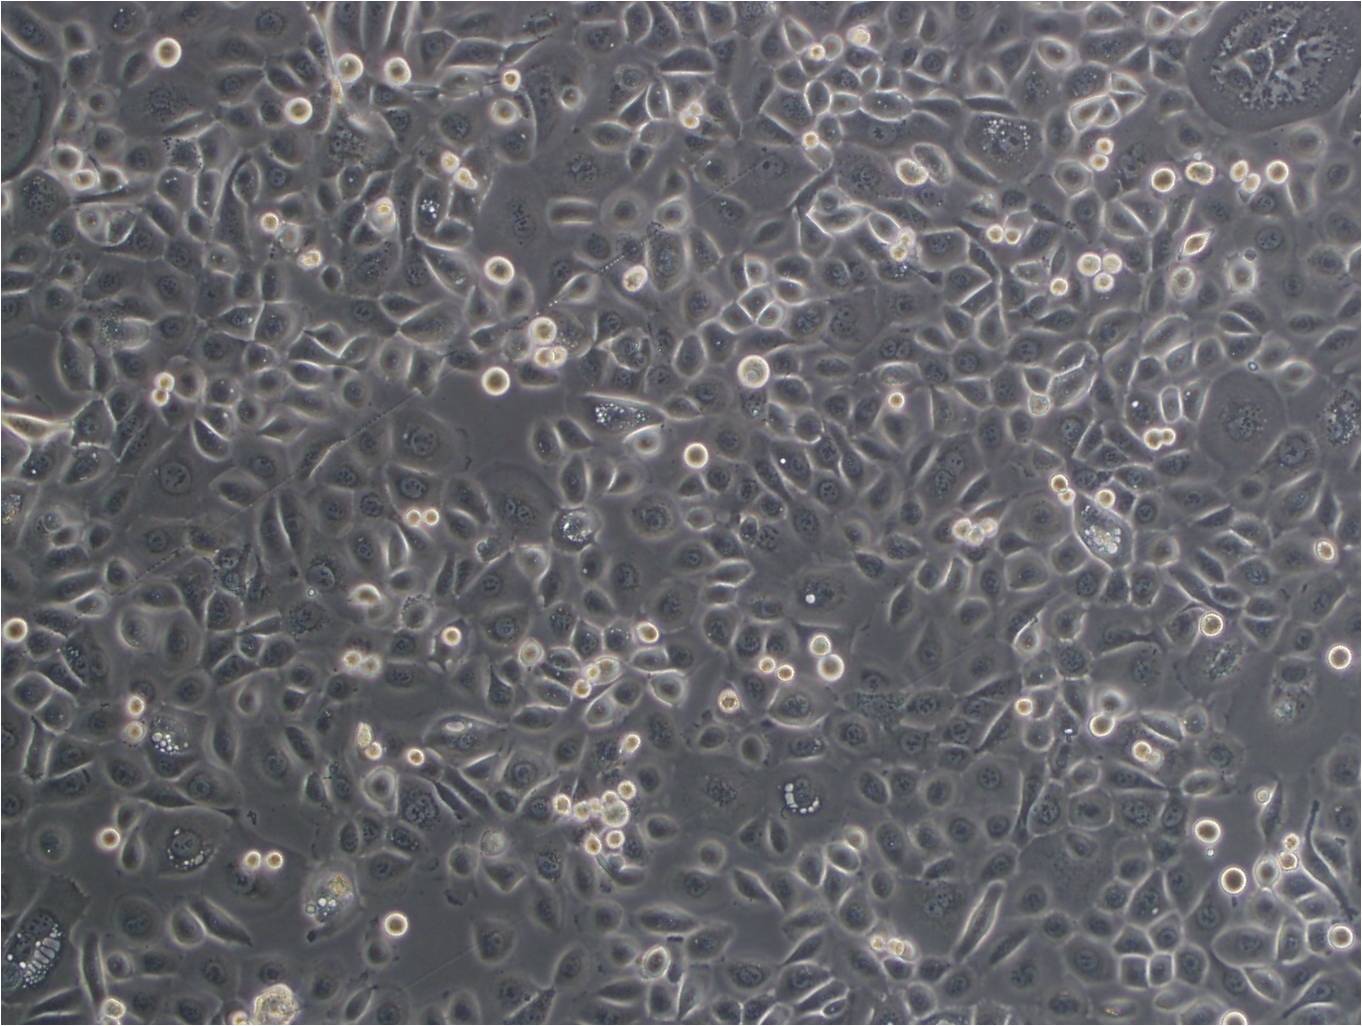 UACC-893 epithelioid cells人乳腺导管癌细胞系,UACC-893 epithelioid cells